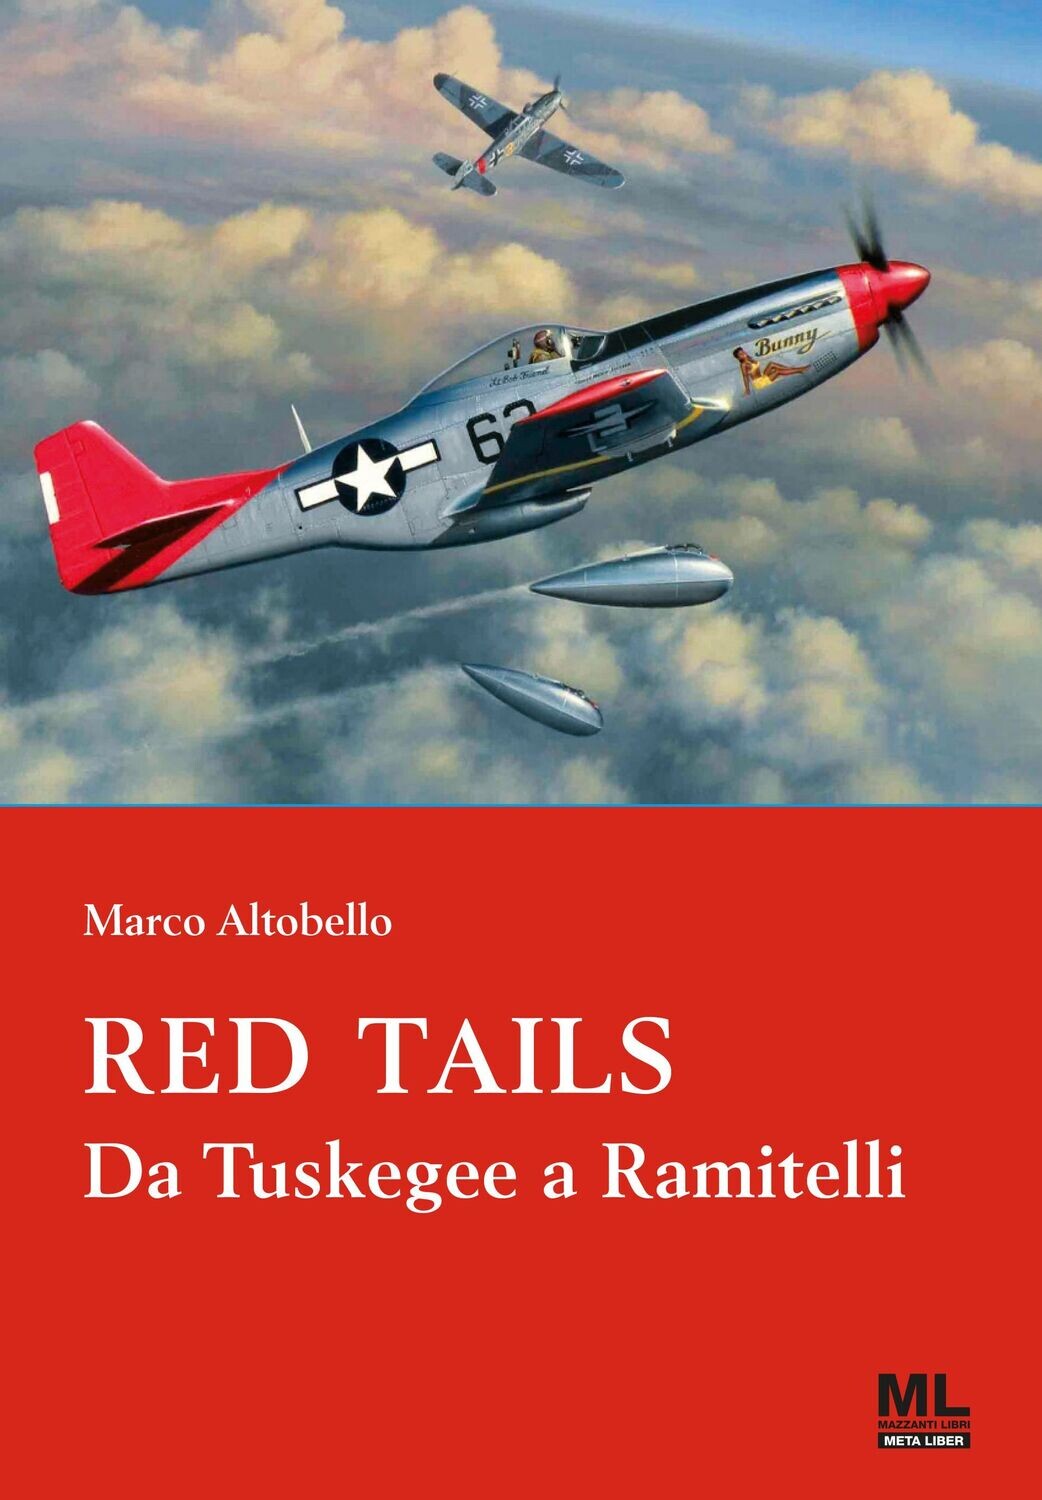 Red Tails. Da Tuskegee a Ramitelli (Meta Liber©)